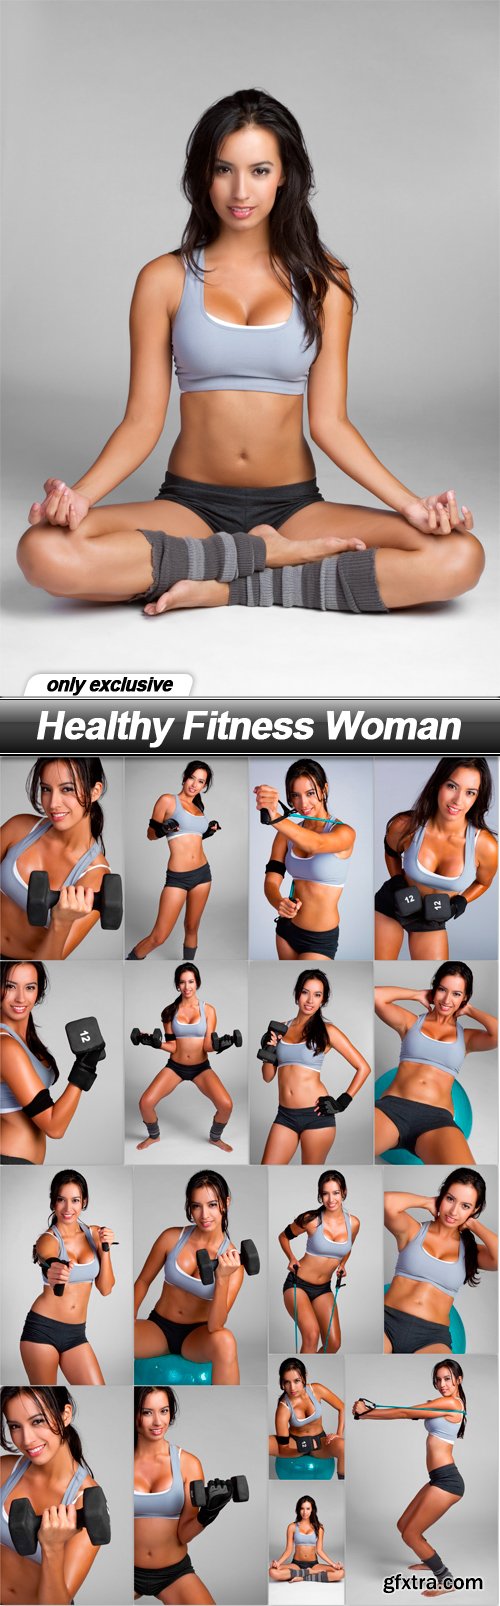 Healthy Fitness Woman - 17 UHQ JPEG